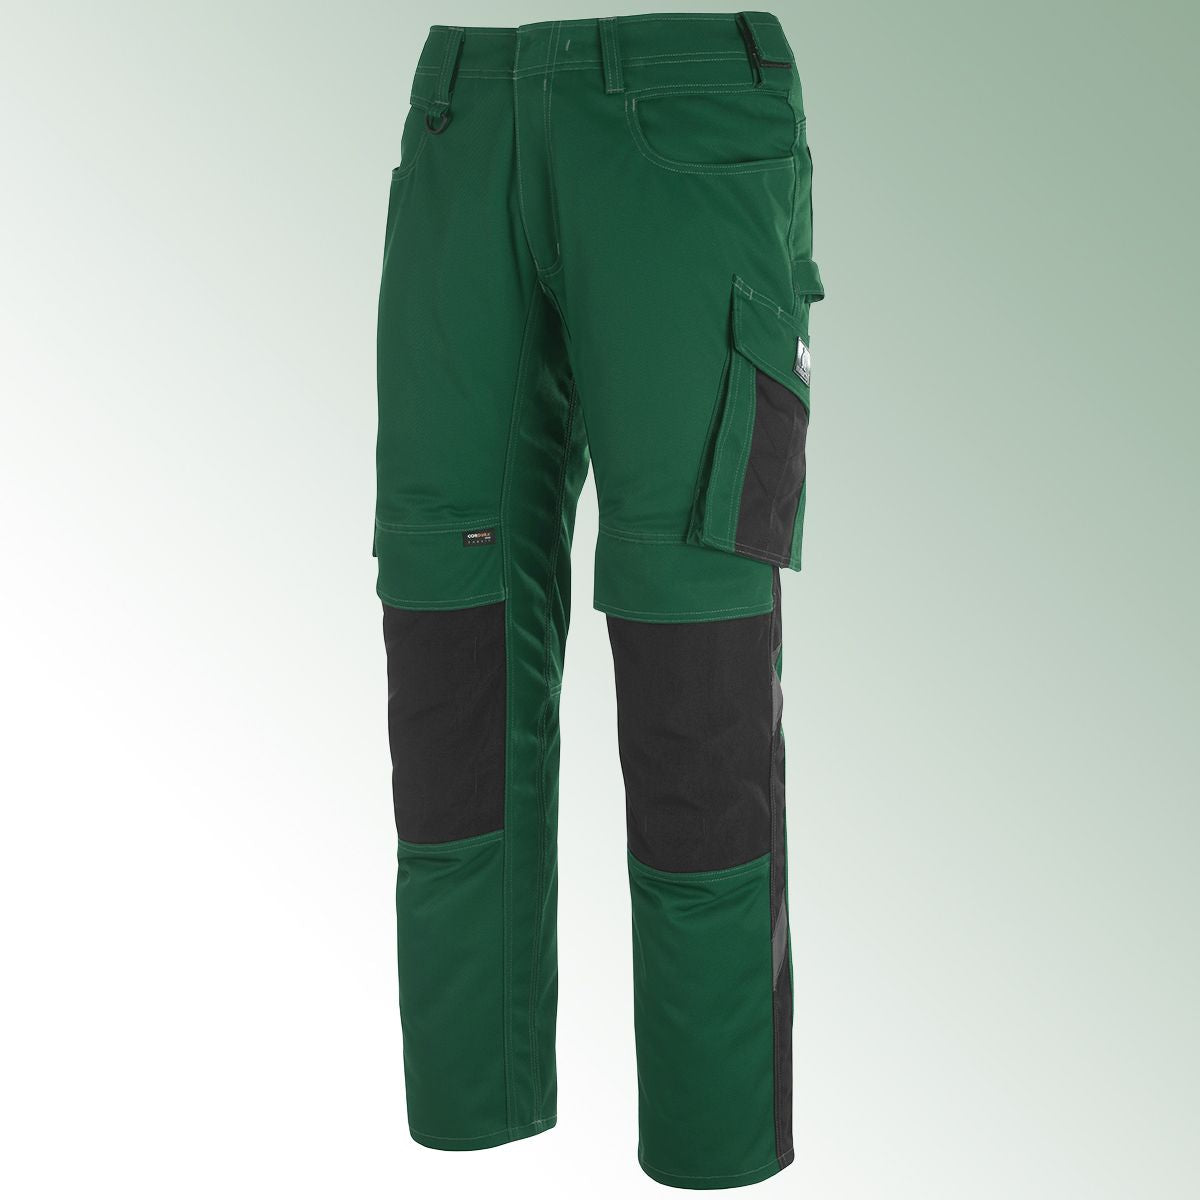 Trousers Mannheim Size 56 Green / Black